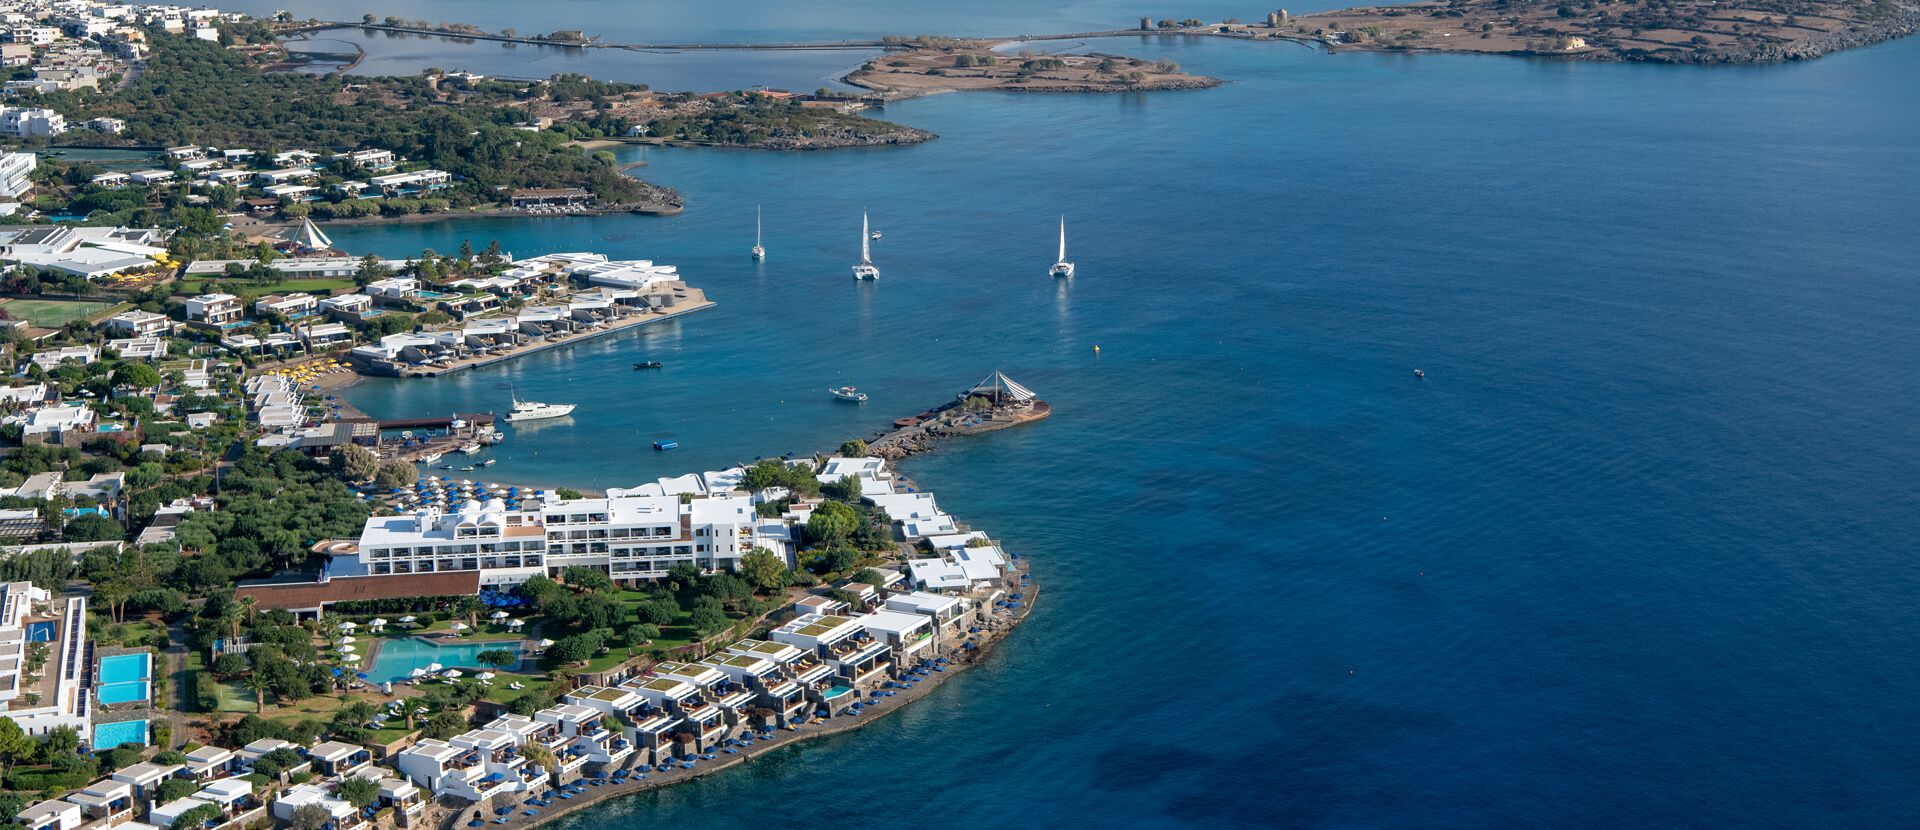 Elounda Beach Hotel & Villas and Elounda Bay Palace, Crete